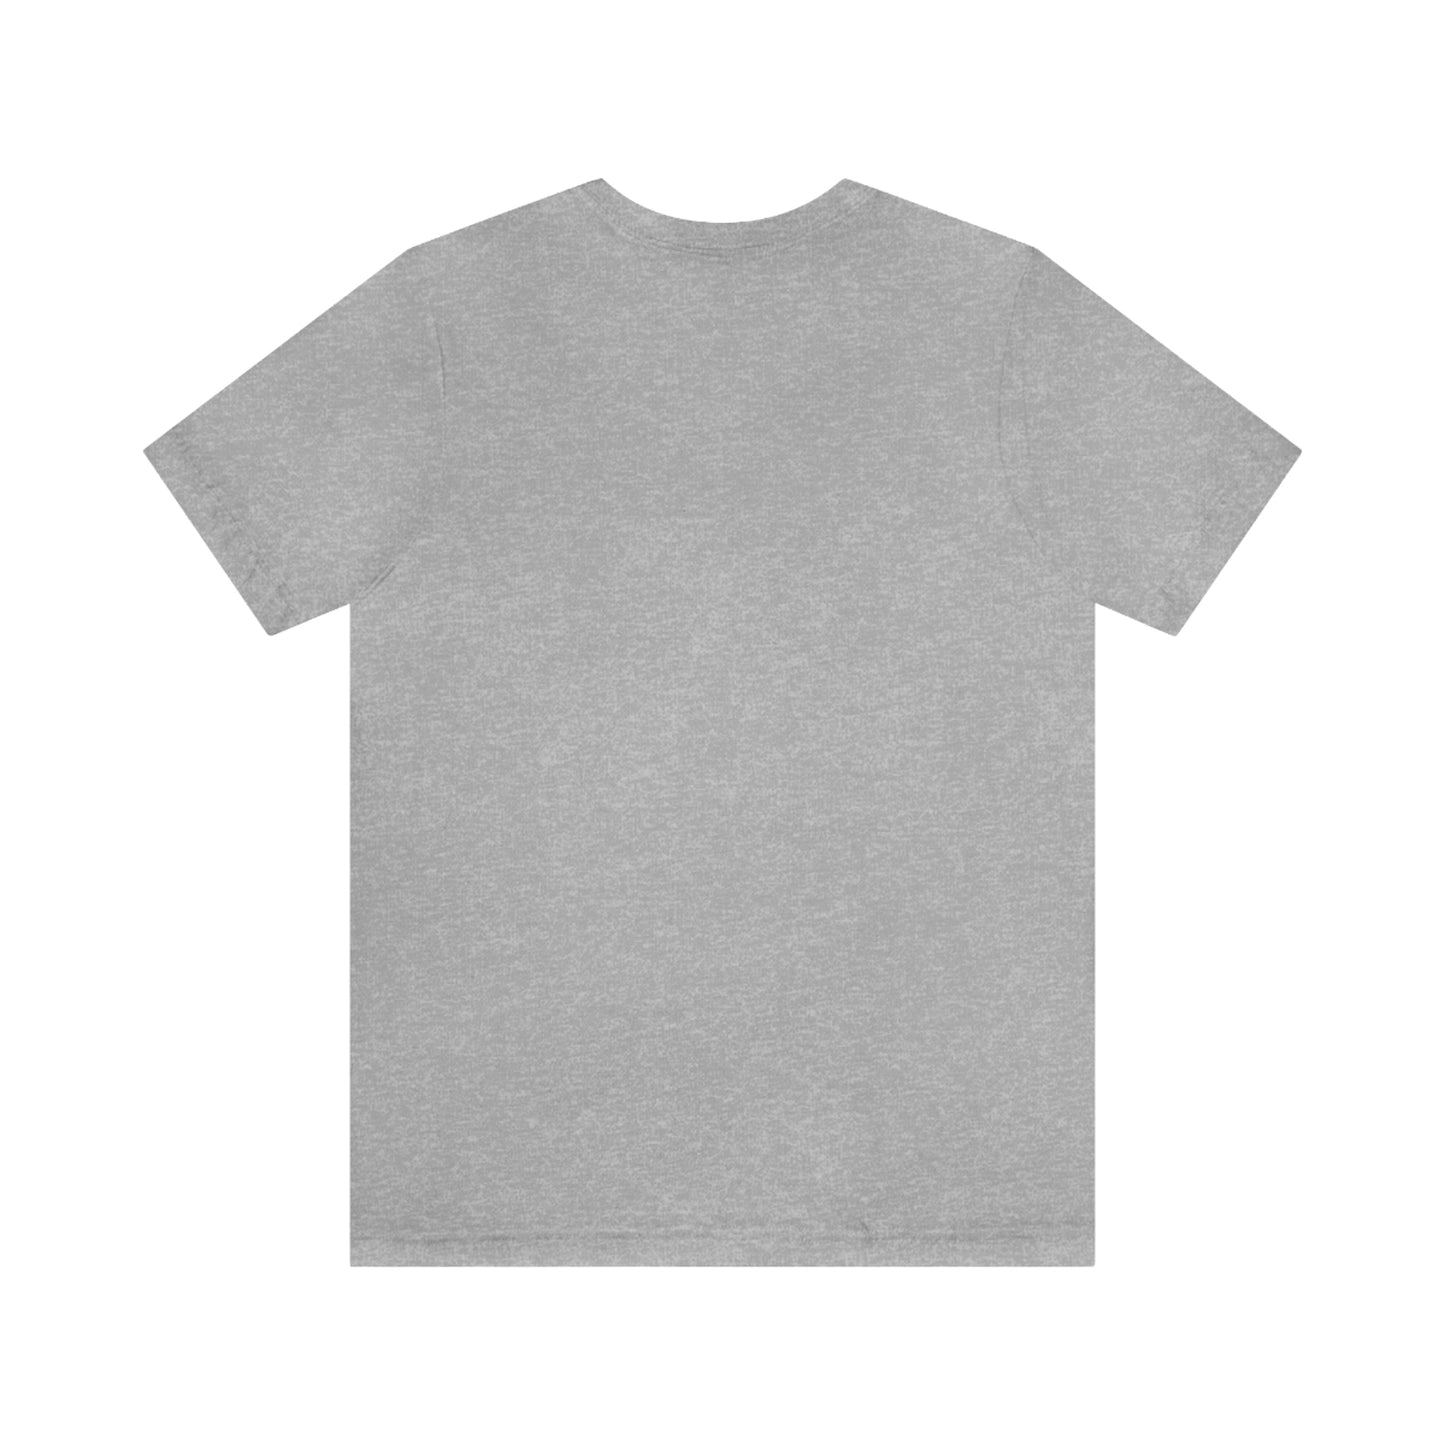 WORDLE t shirt - Unisex Jersey Short Sleeve Tee